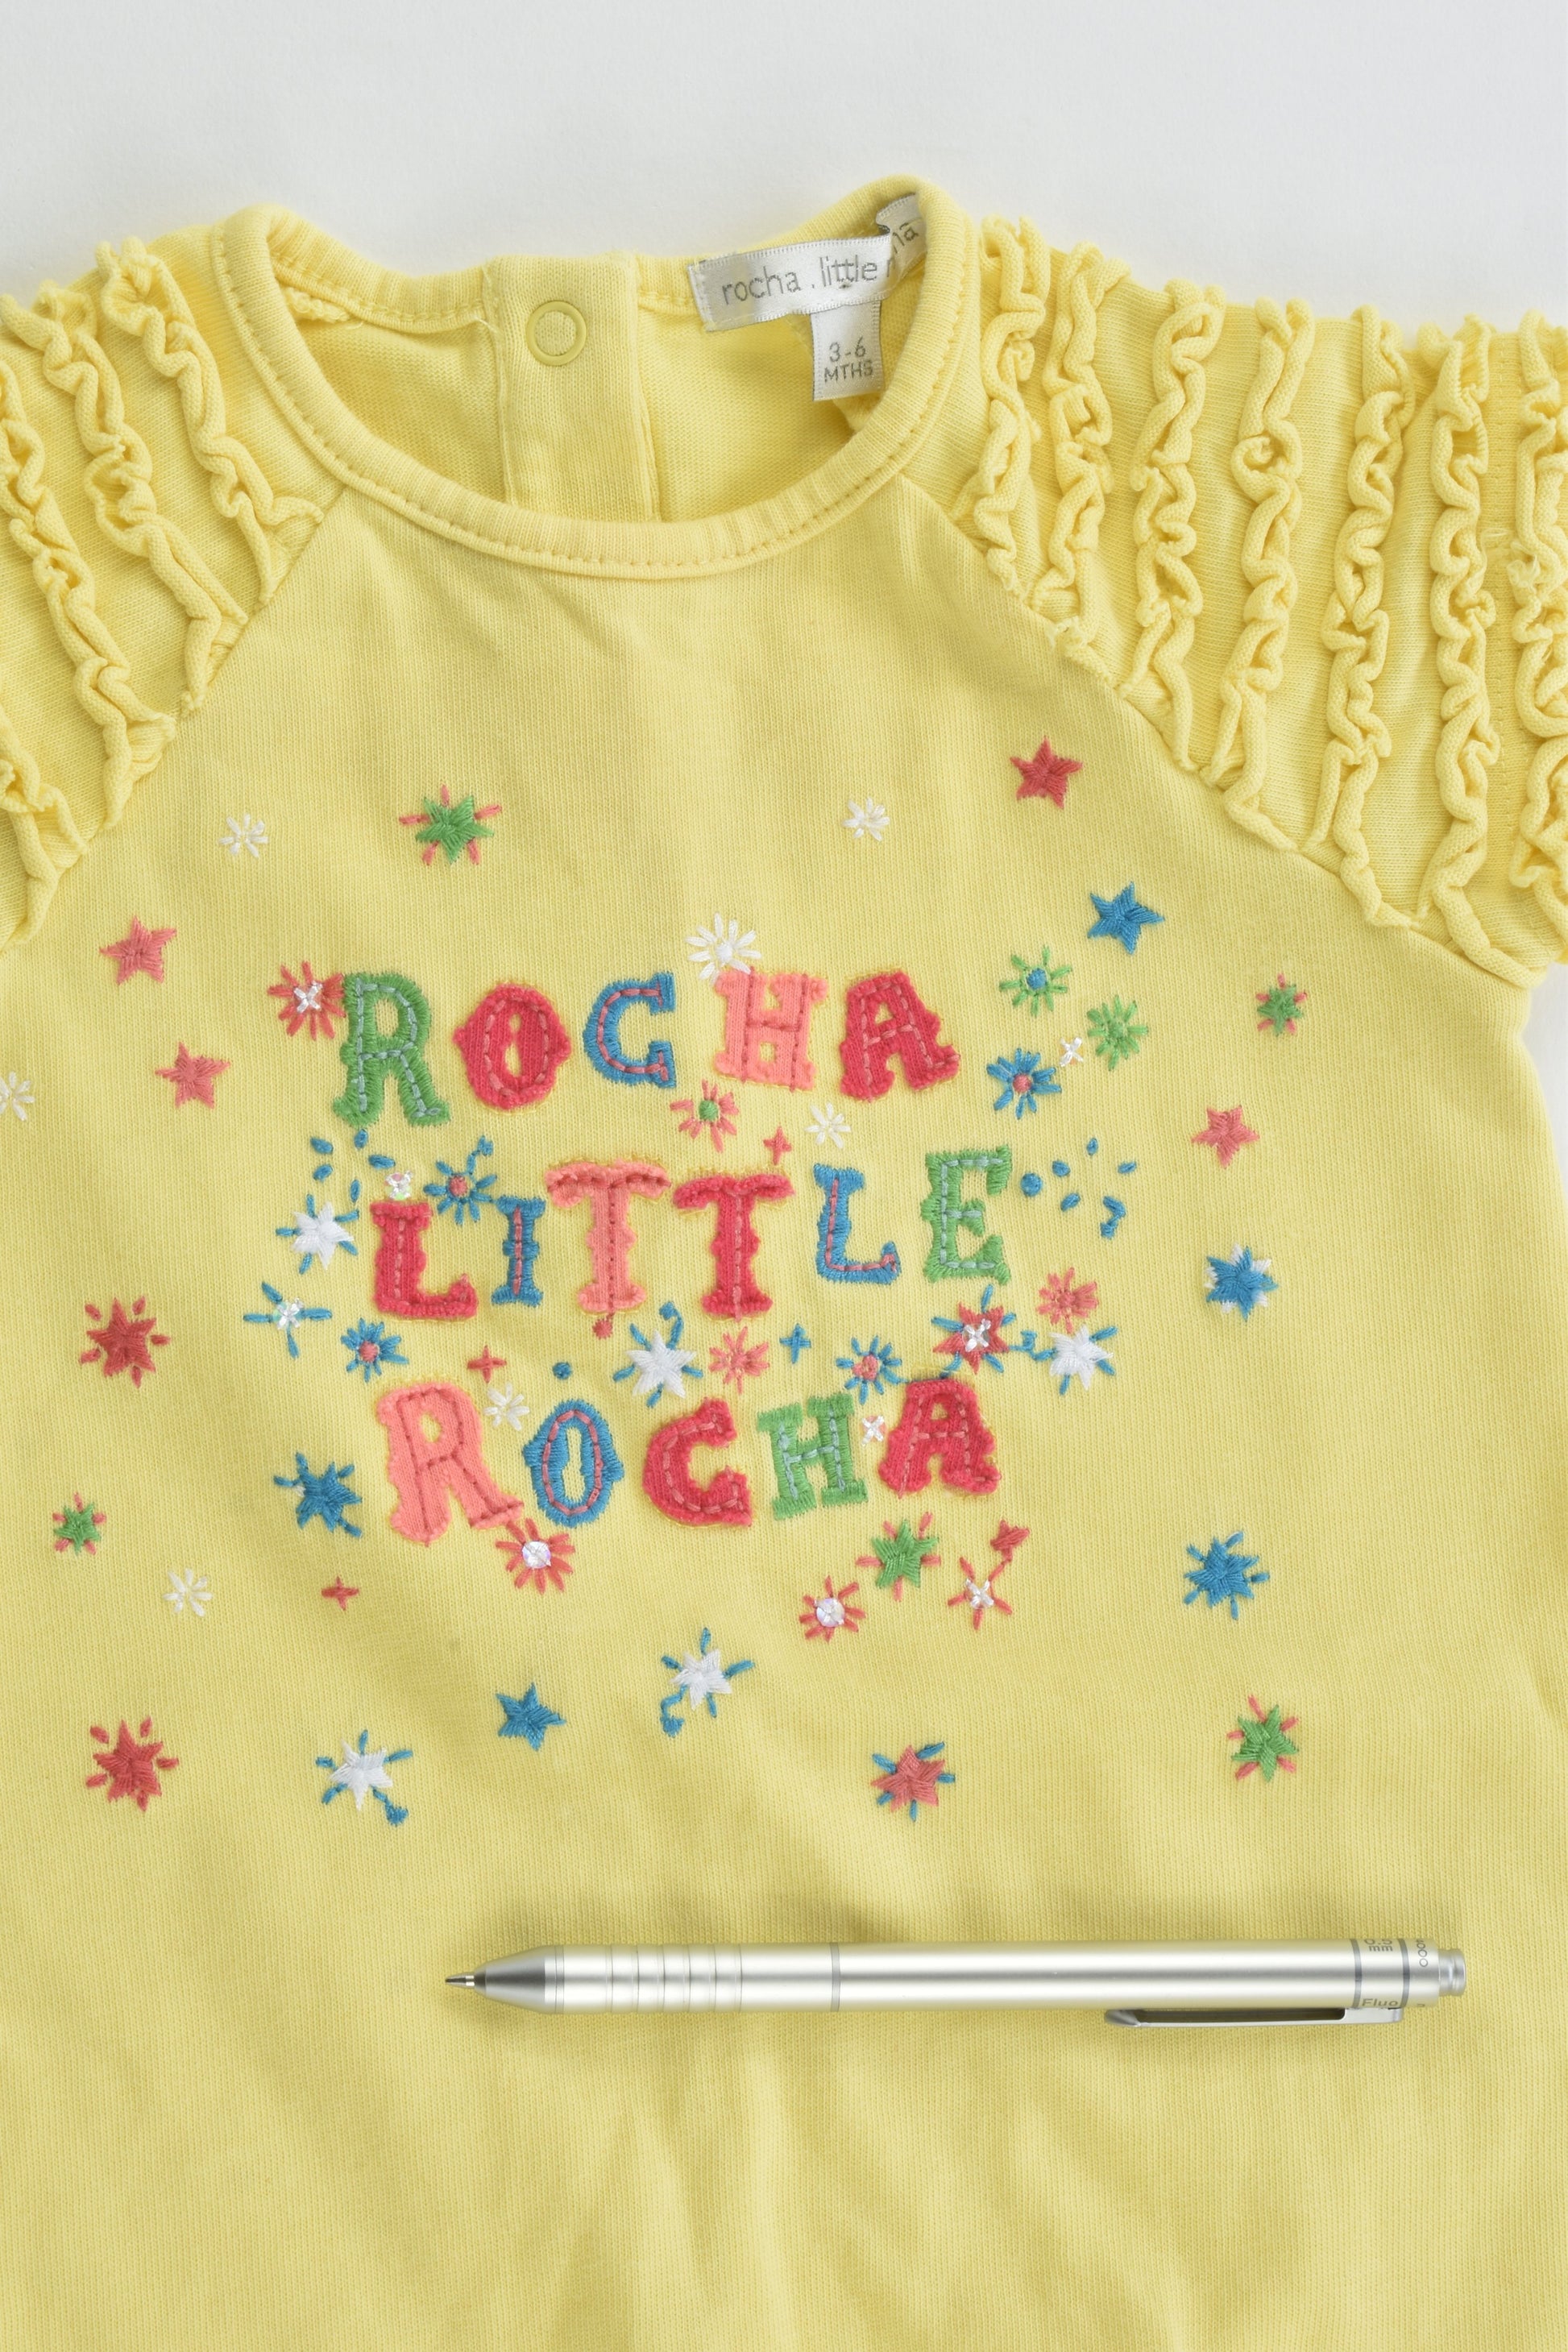 Rocha Little Rocha Size 00 (3-6 months, 68 cm) Short Romper